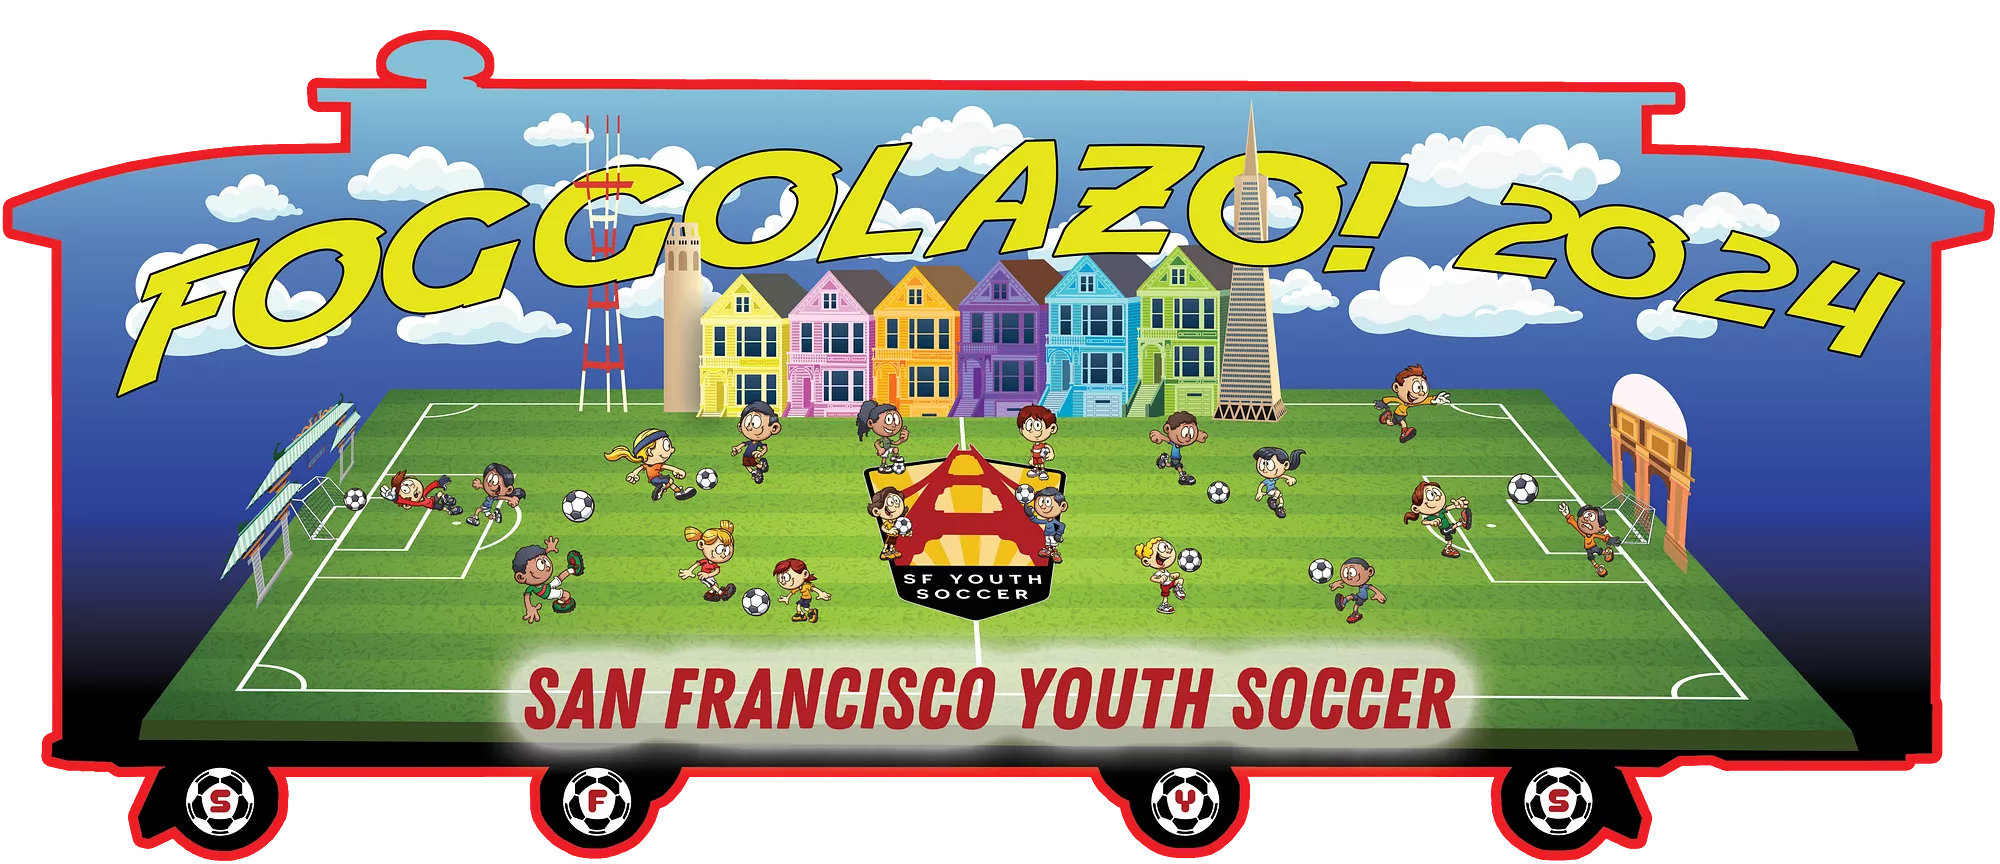 FOGGOLAZO! 2024 Logo designed by Bryan McDonald